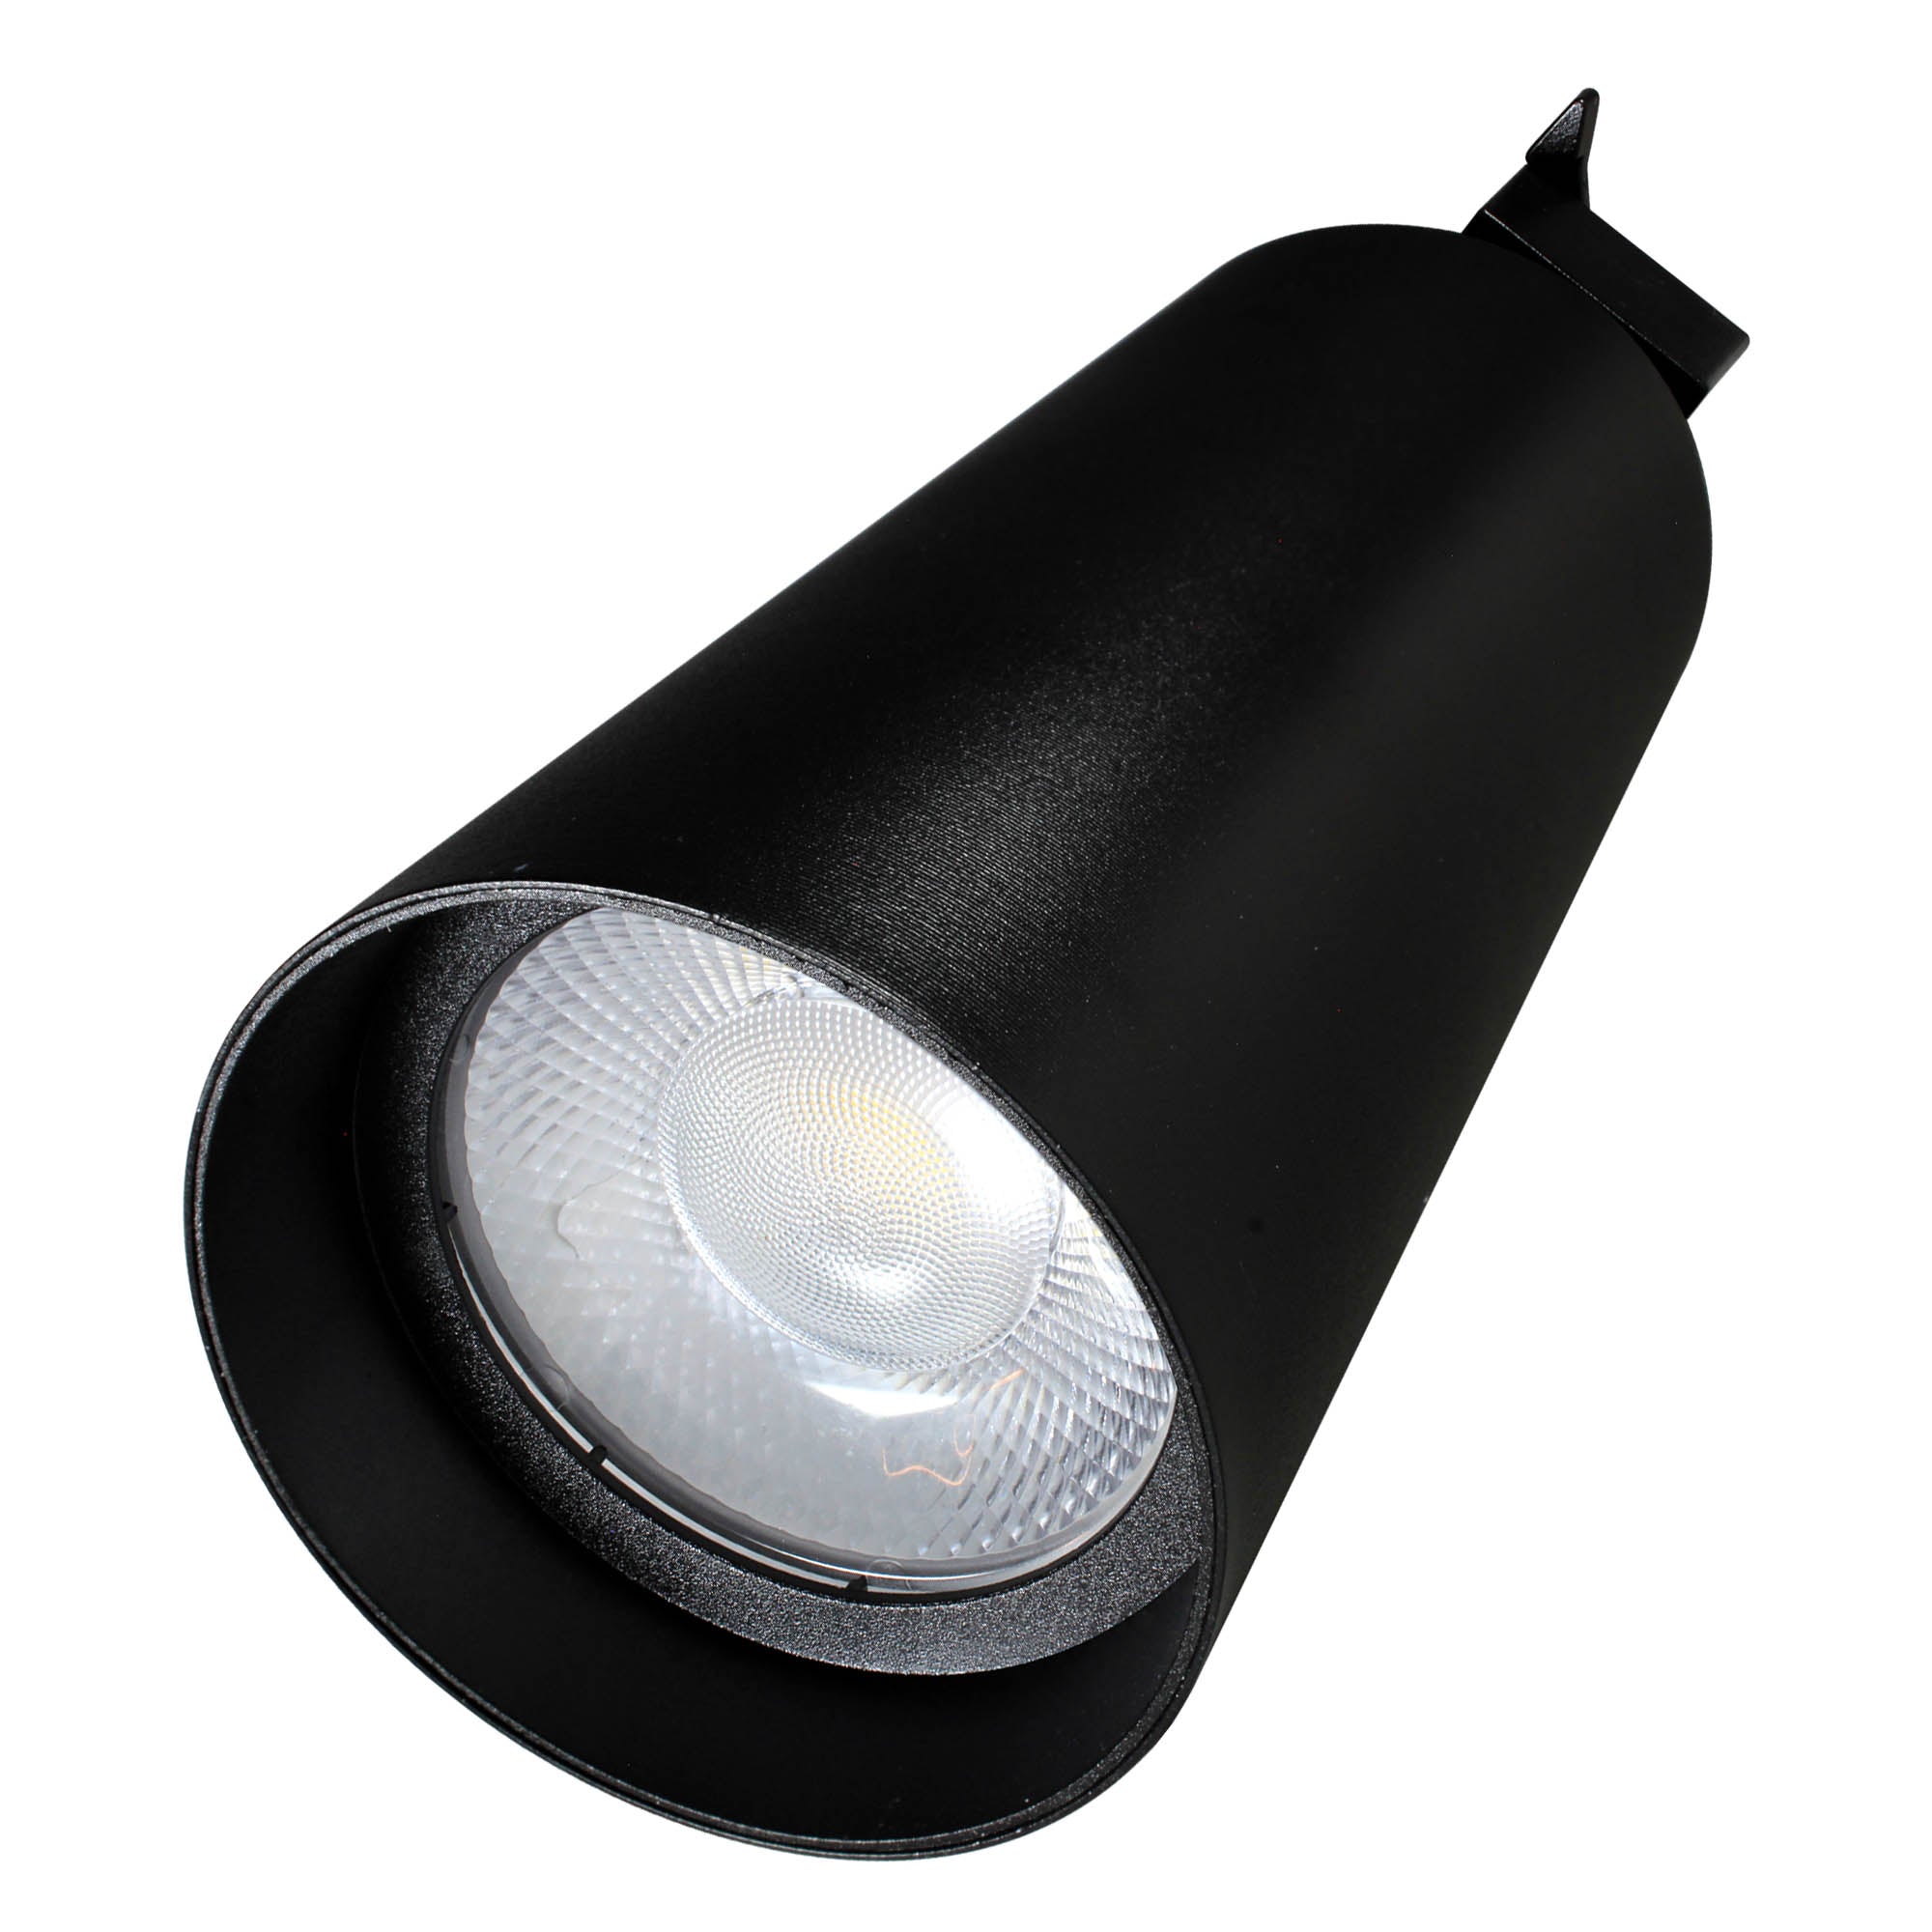 Luminaria LED tipo Spot para Riel, Modelo TL-2929.R - Precisión y Estilo para Iluminar con Distinción